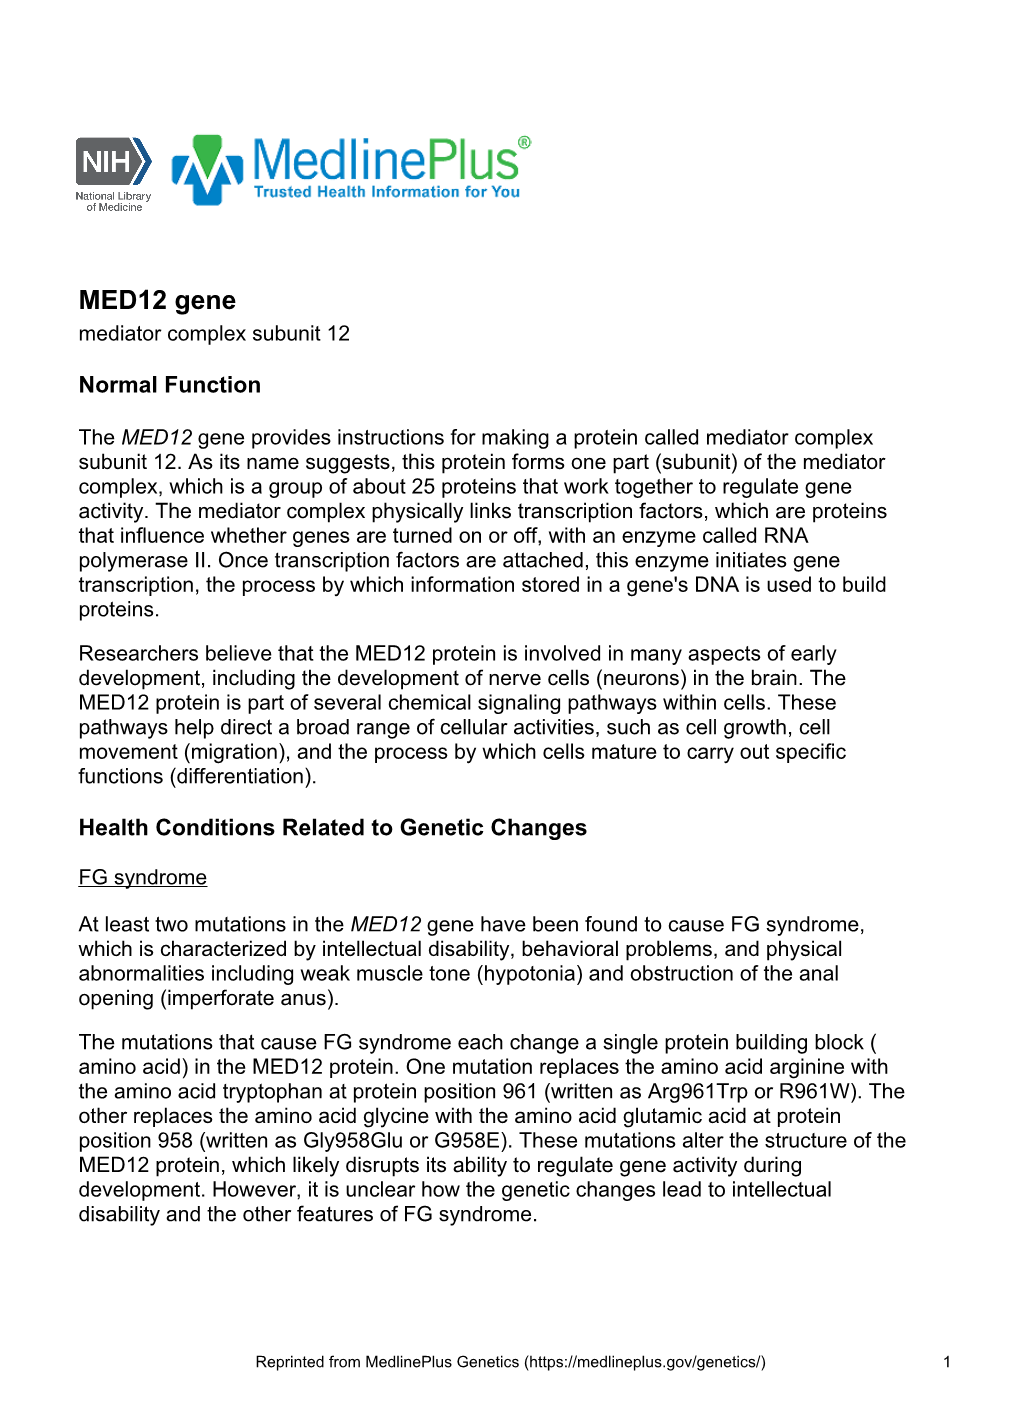 MED12 Gene Mediator Complex Subunit 12